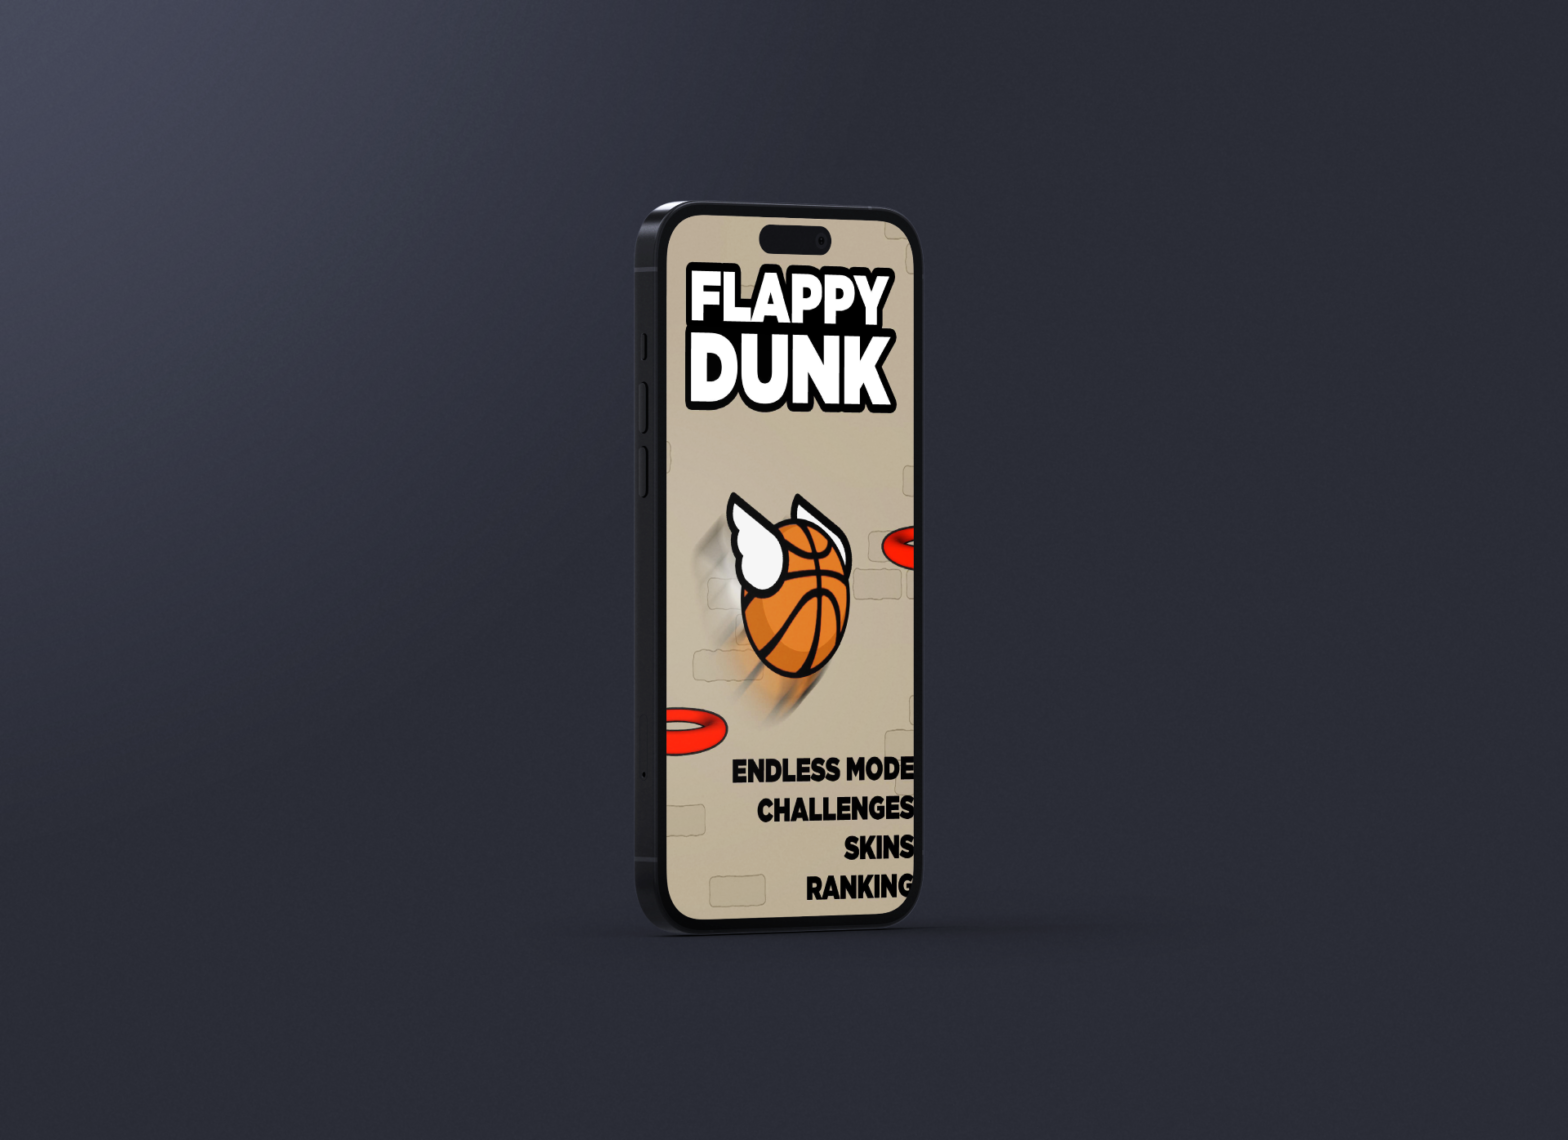 Flappy Dunk generates 50 million downloads